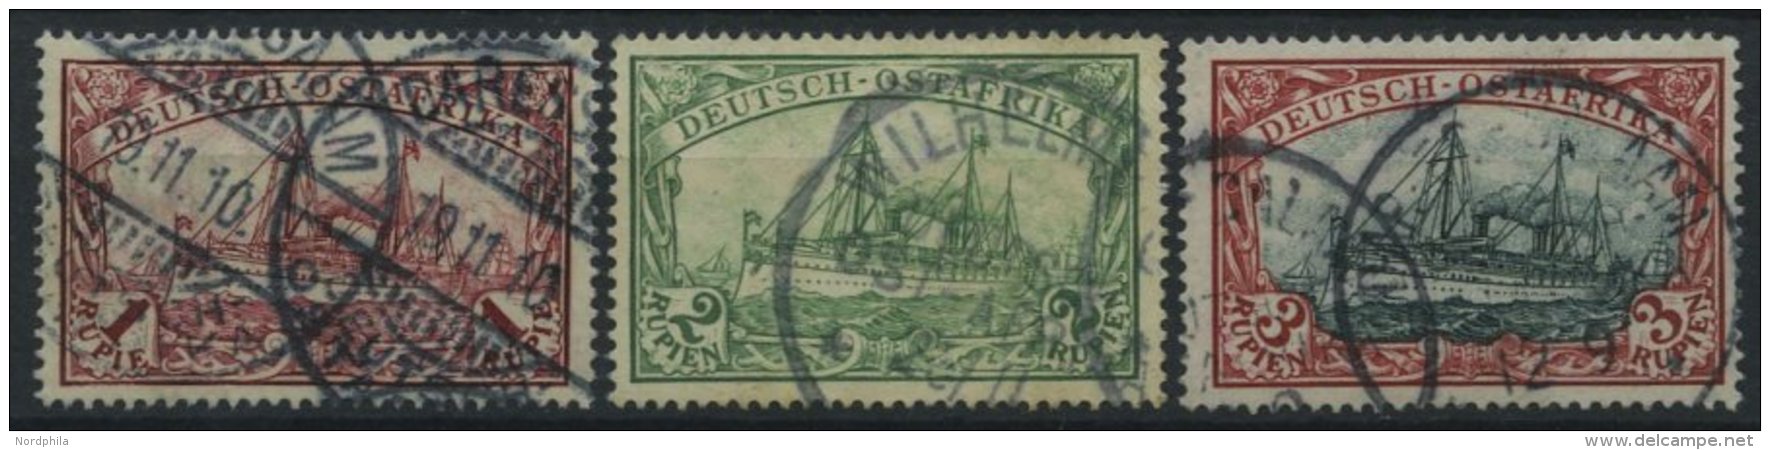 DEUTSCH-OSTAFRIKA 19-21a O, 1901, 1 - 3 R. Kaiseryacht, 3 Werte Feinst/Pracht, Mi. 390.- - German East Africa